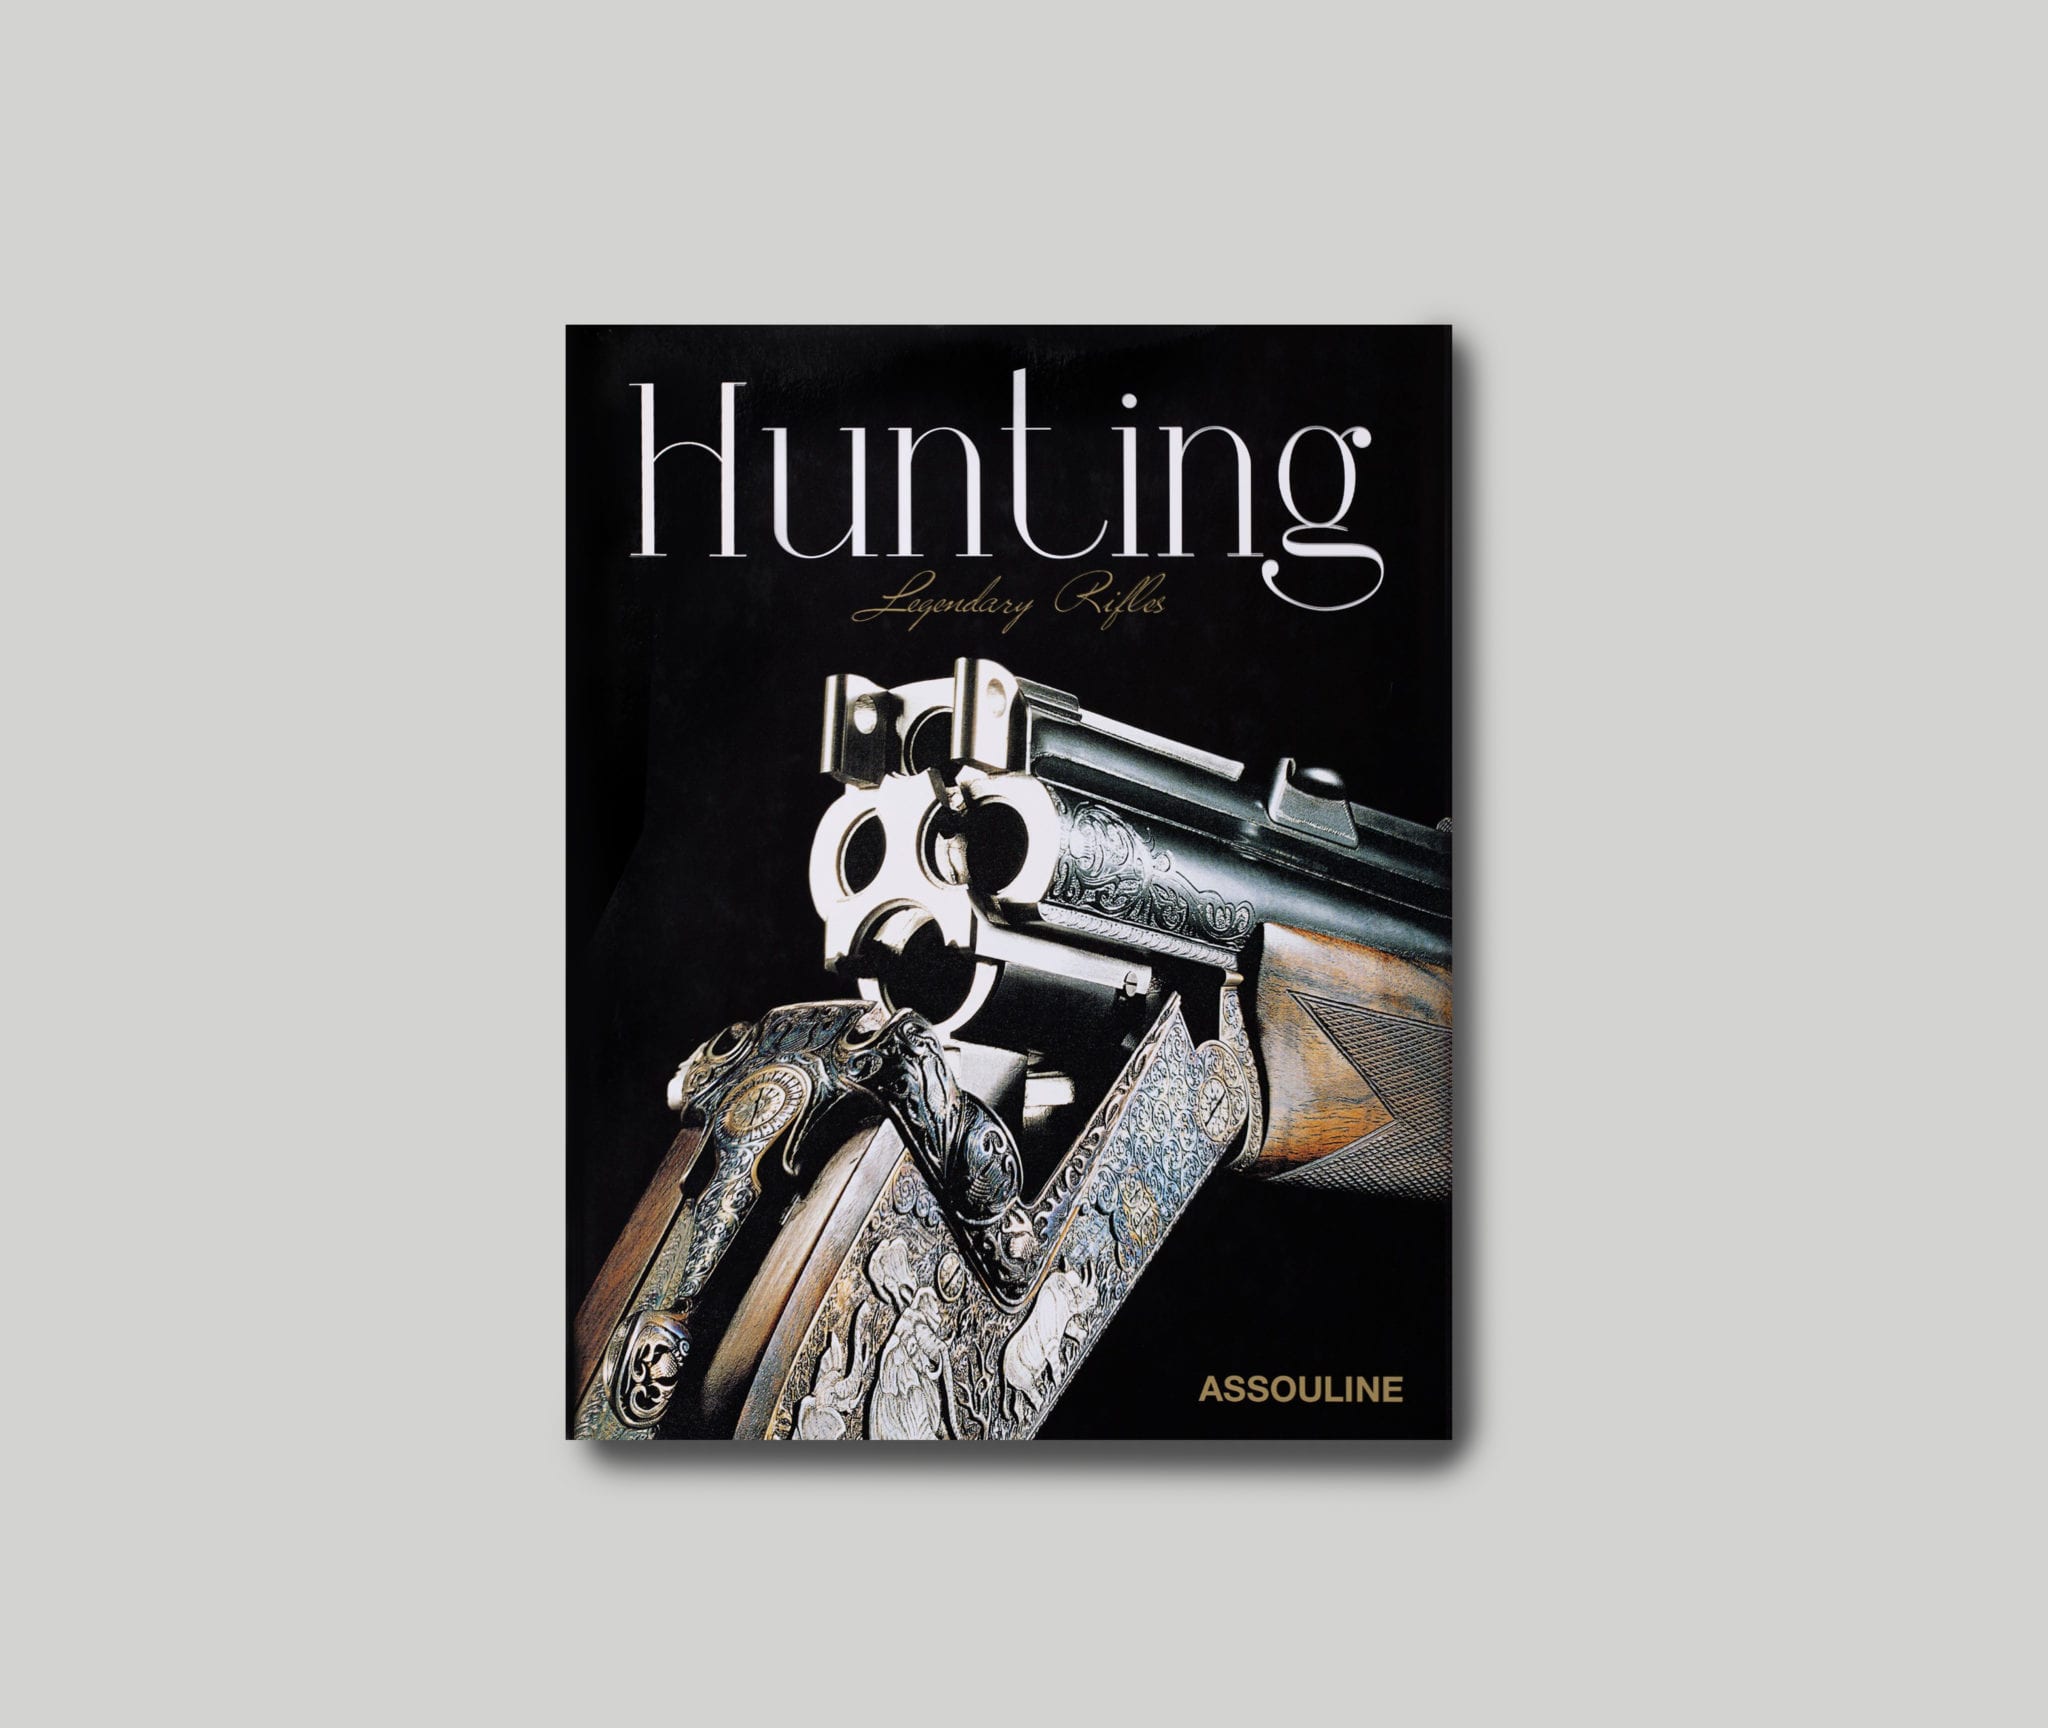 Assouline Hunting, Legendary Rifles